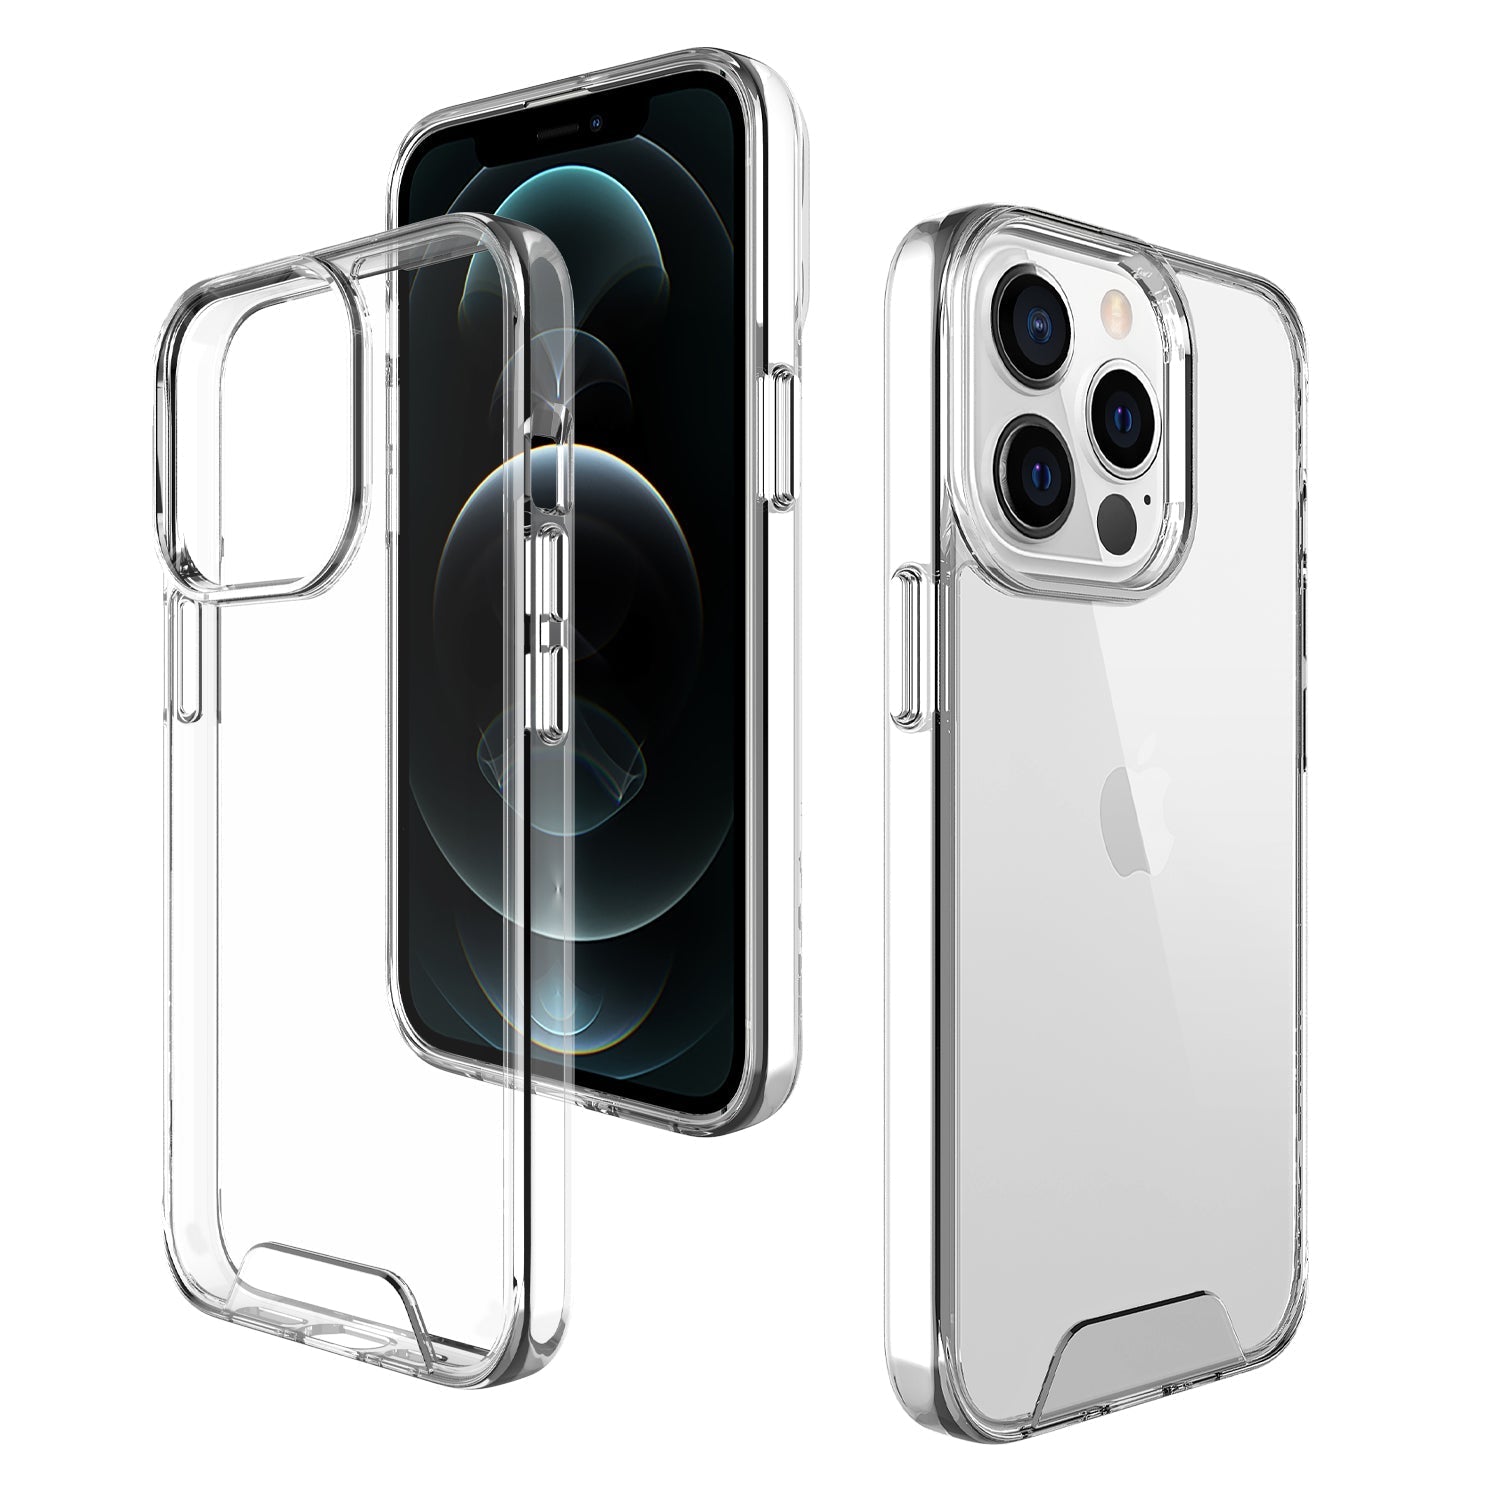 iPhone 14 Pro Max SPECTRUM Clear Slim Case - Clear